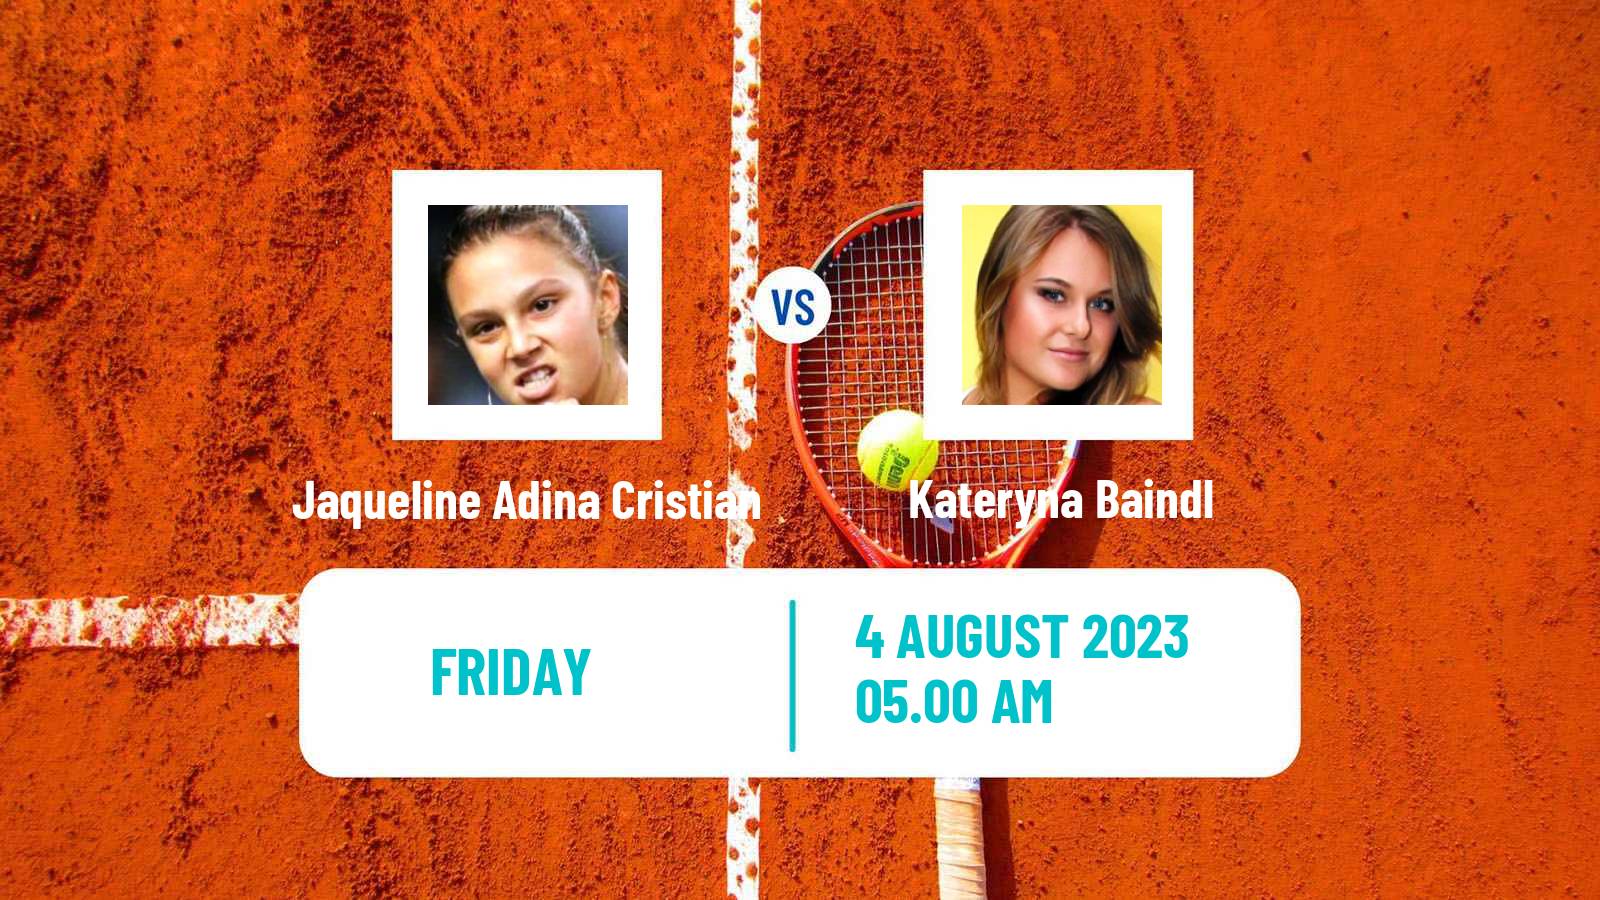 Tennis WTA Prague Jaqueline Adina Cristian - Kateryna Baindl